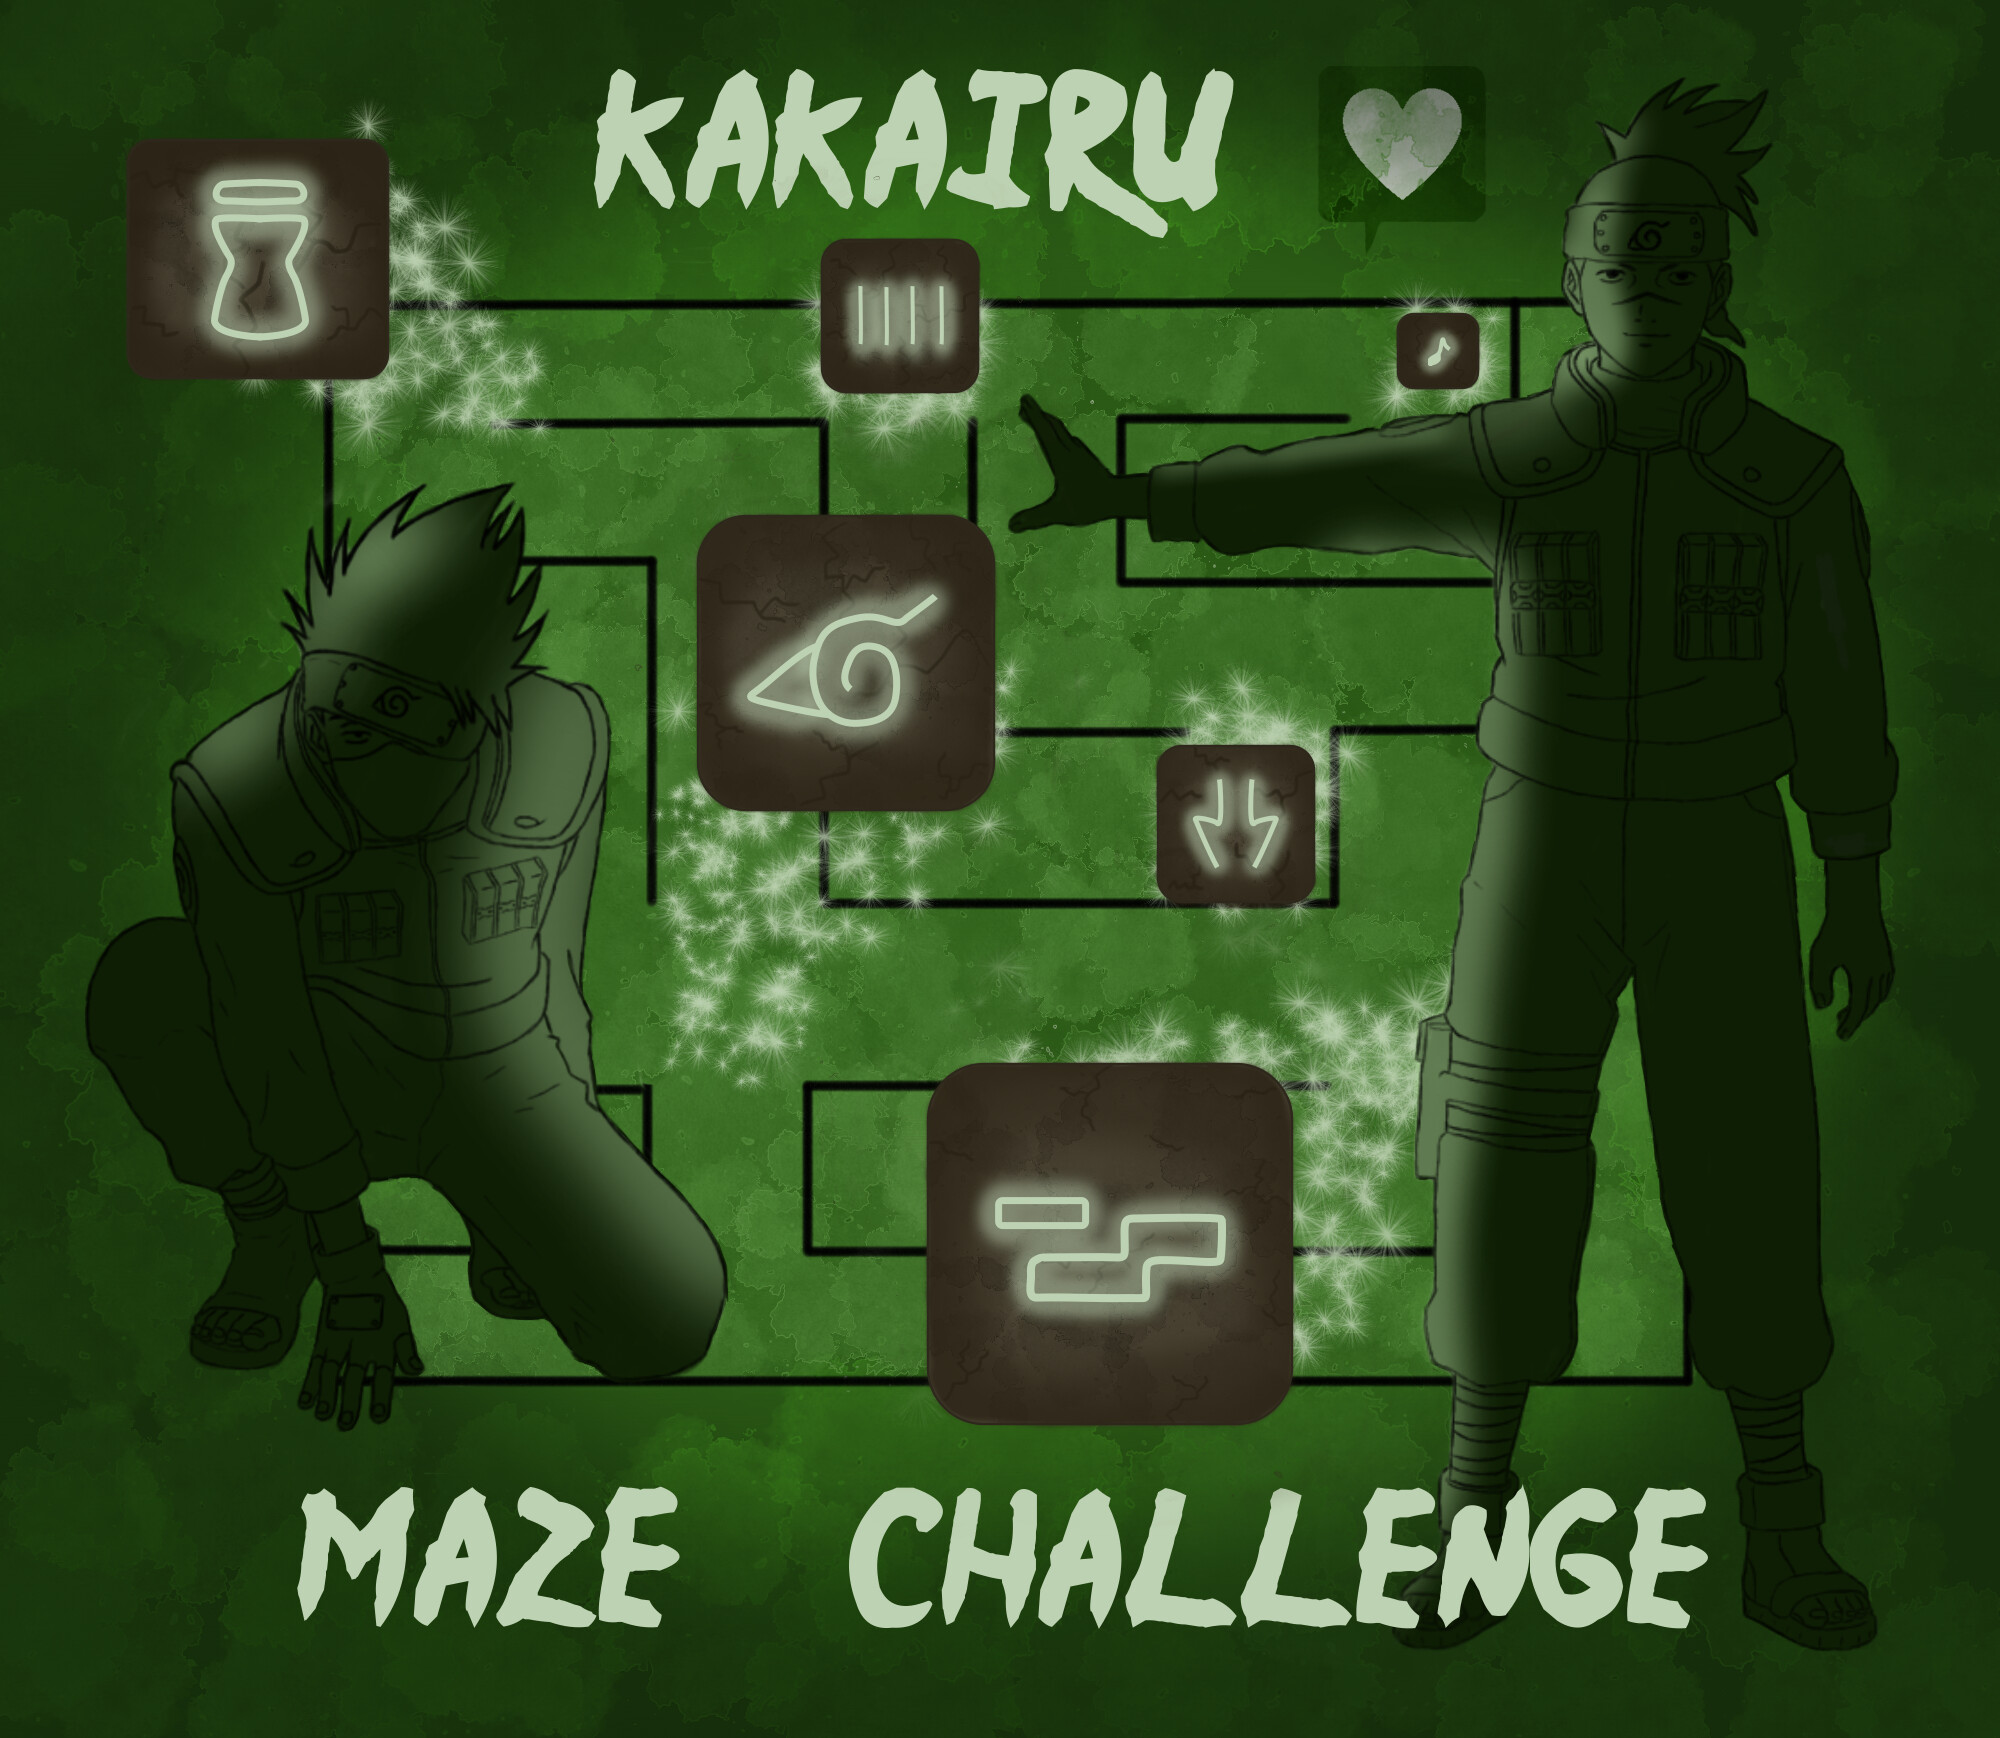 kakairu maze challenge 2-1